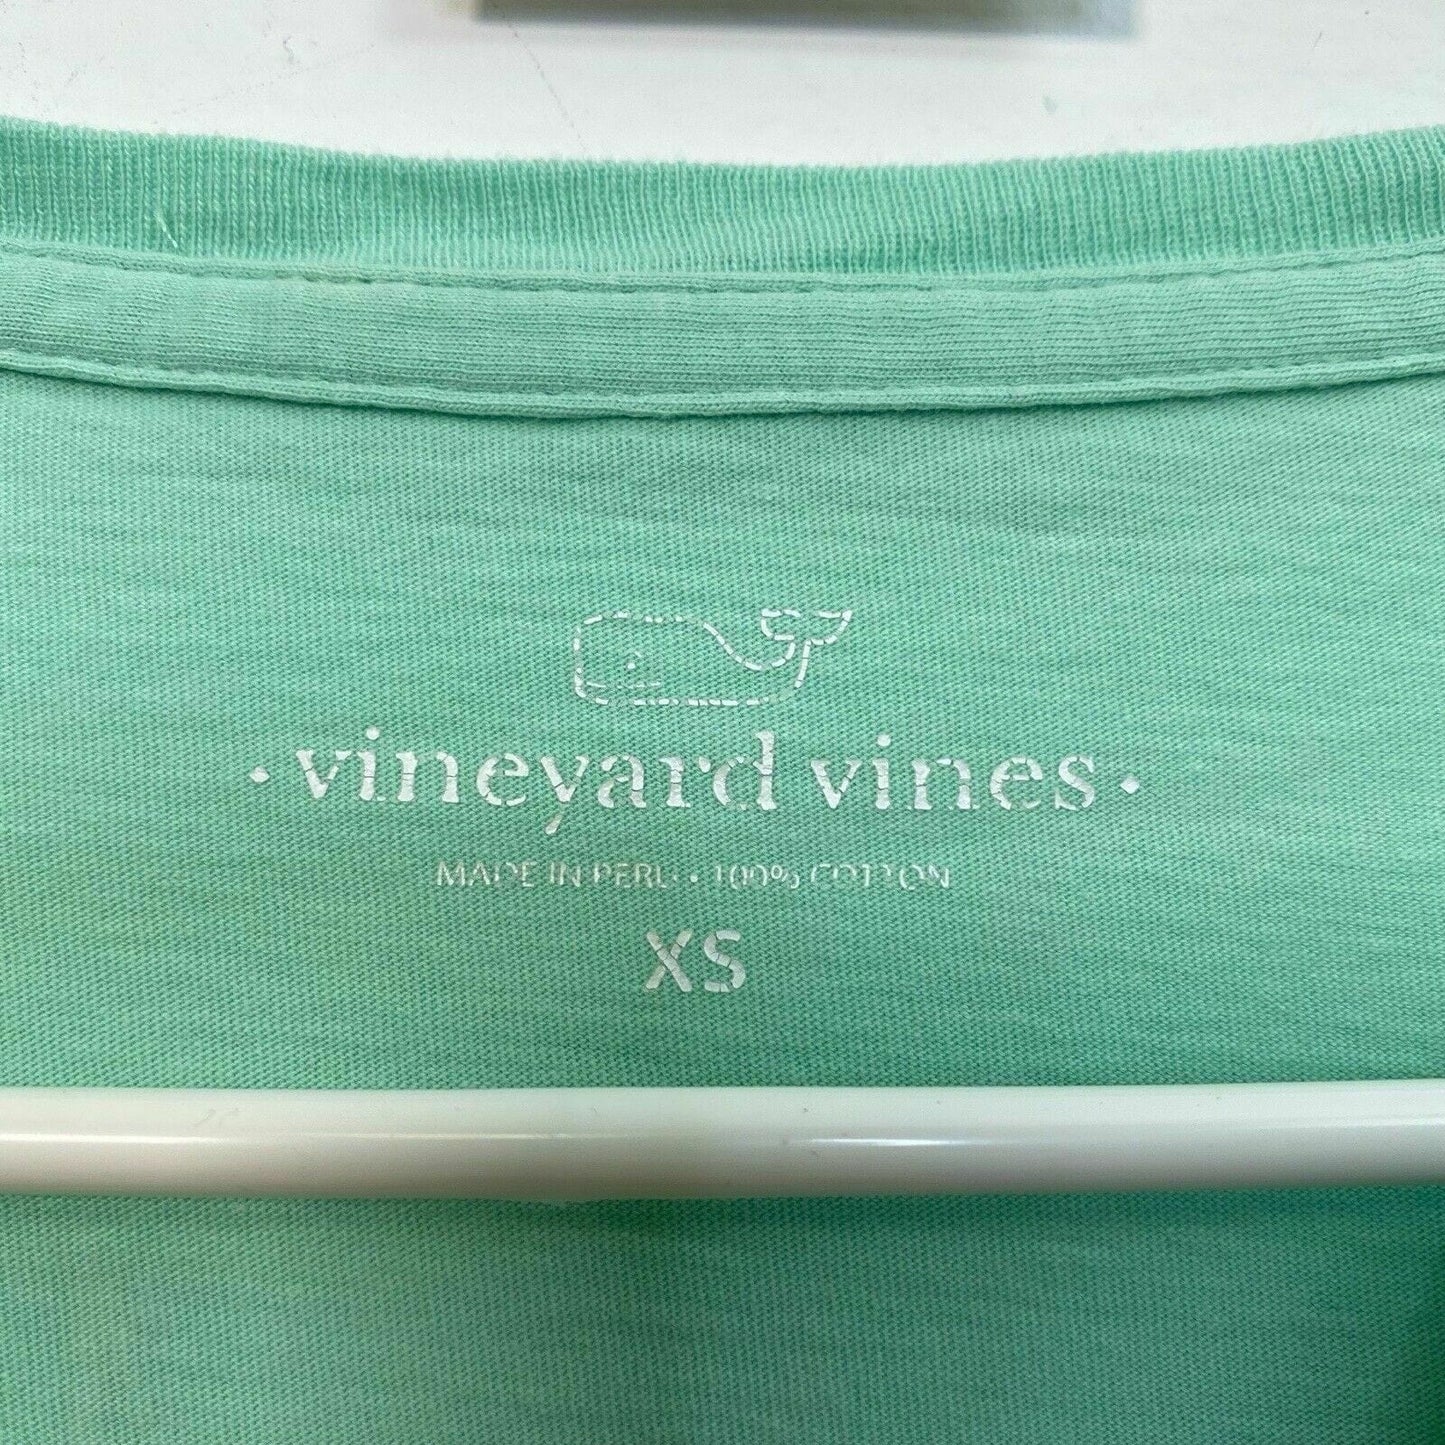 Captivating Vineyard Vines Womens T-Shirt Mint Green Long Sleeve XS